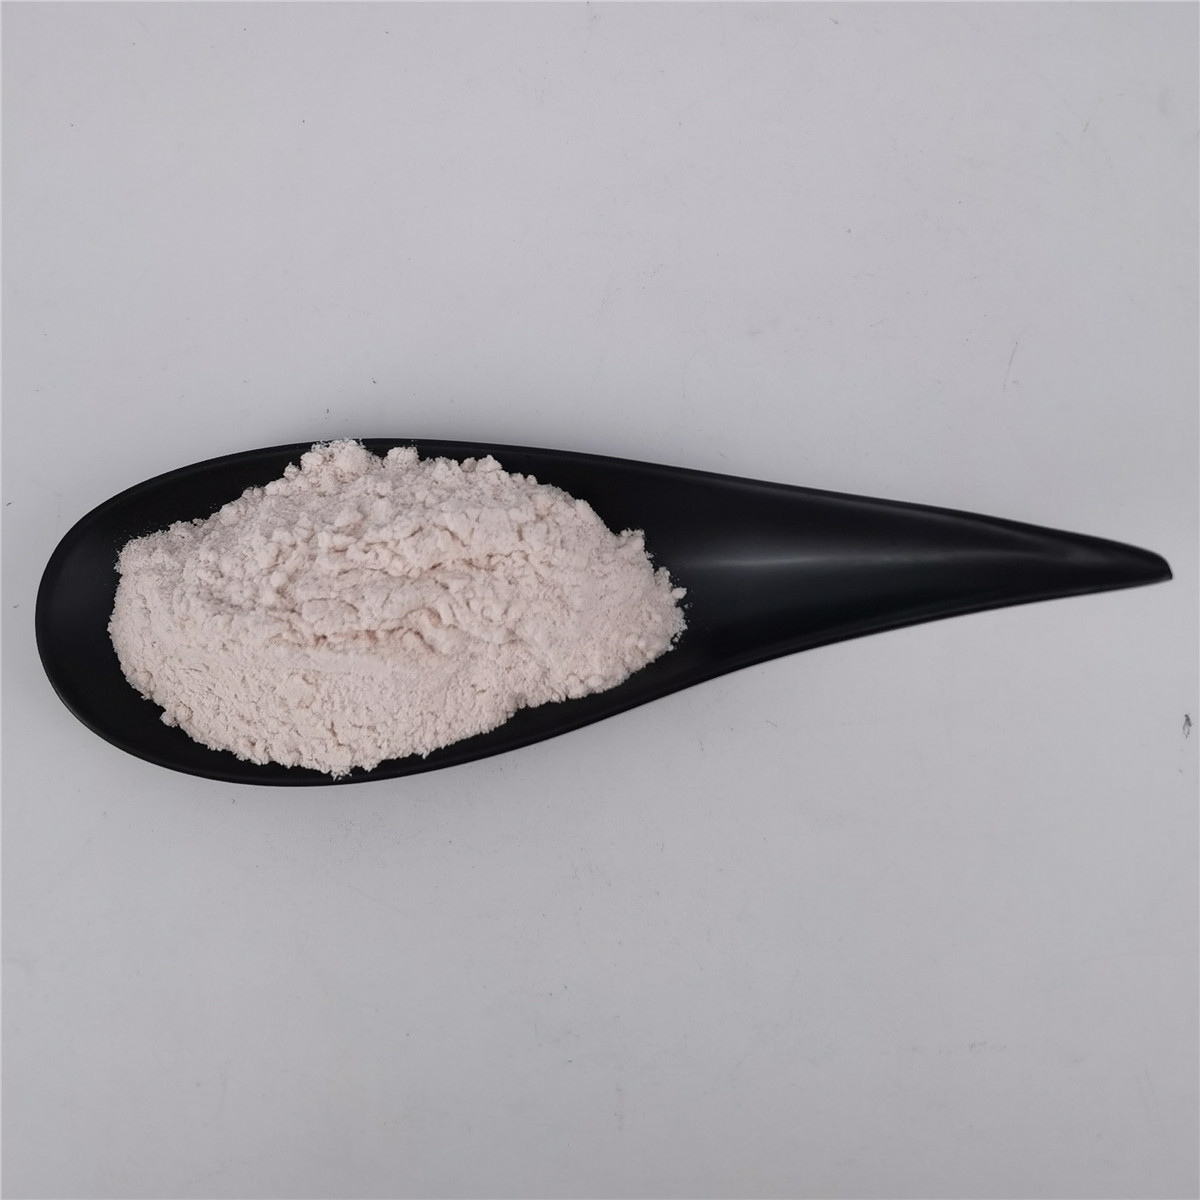  Microbial Fermentation Superoxide Dismutase Powder 9054-89-1 Manufactures